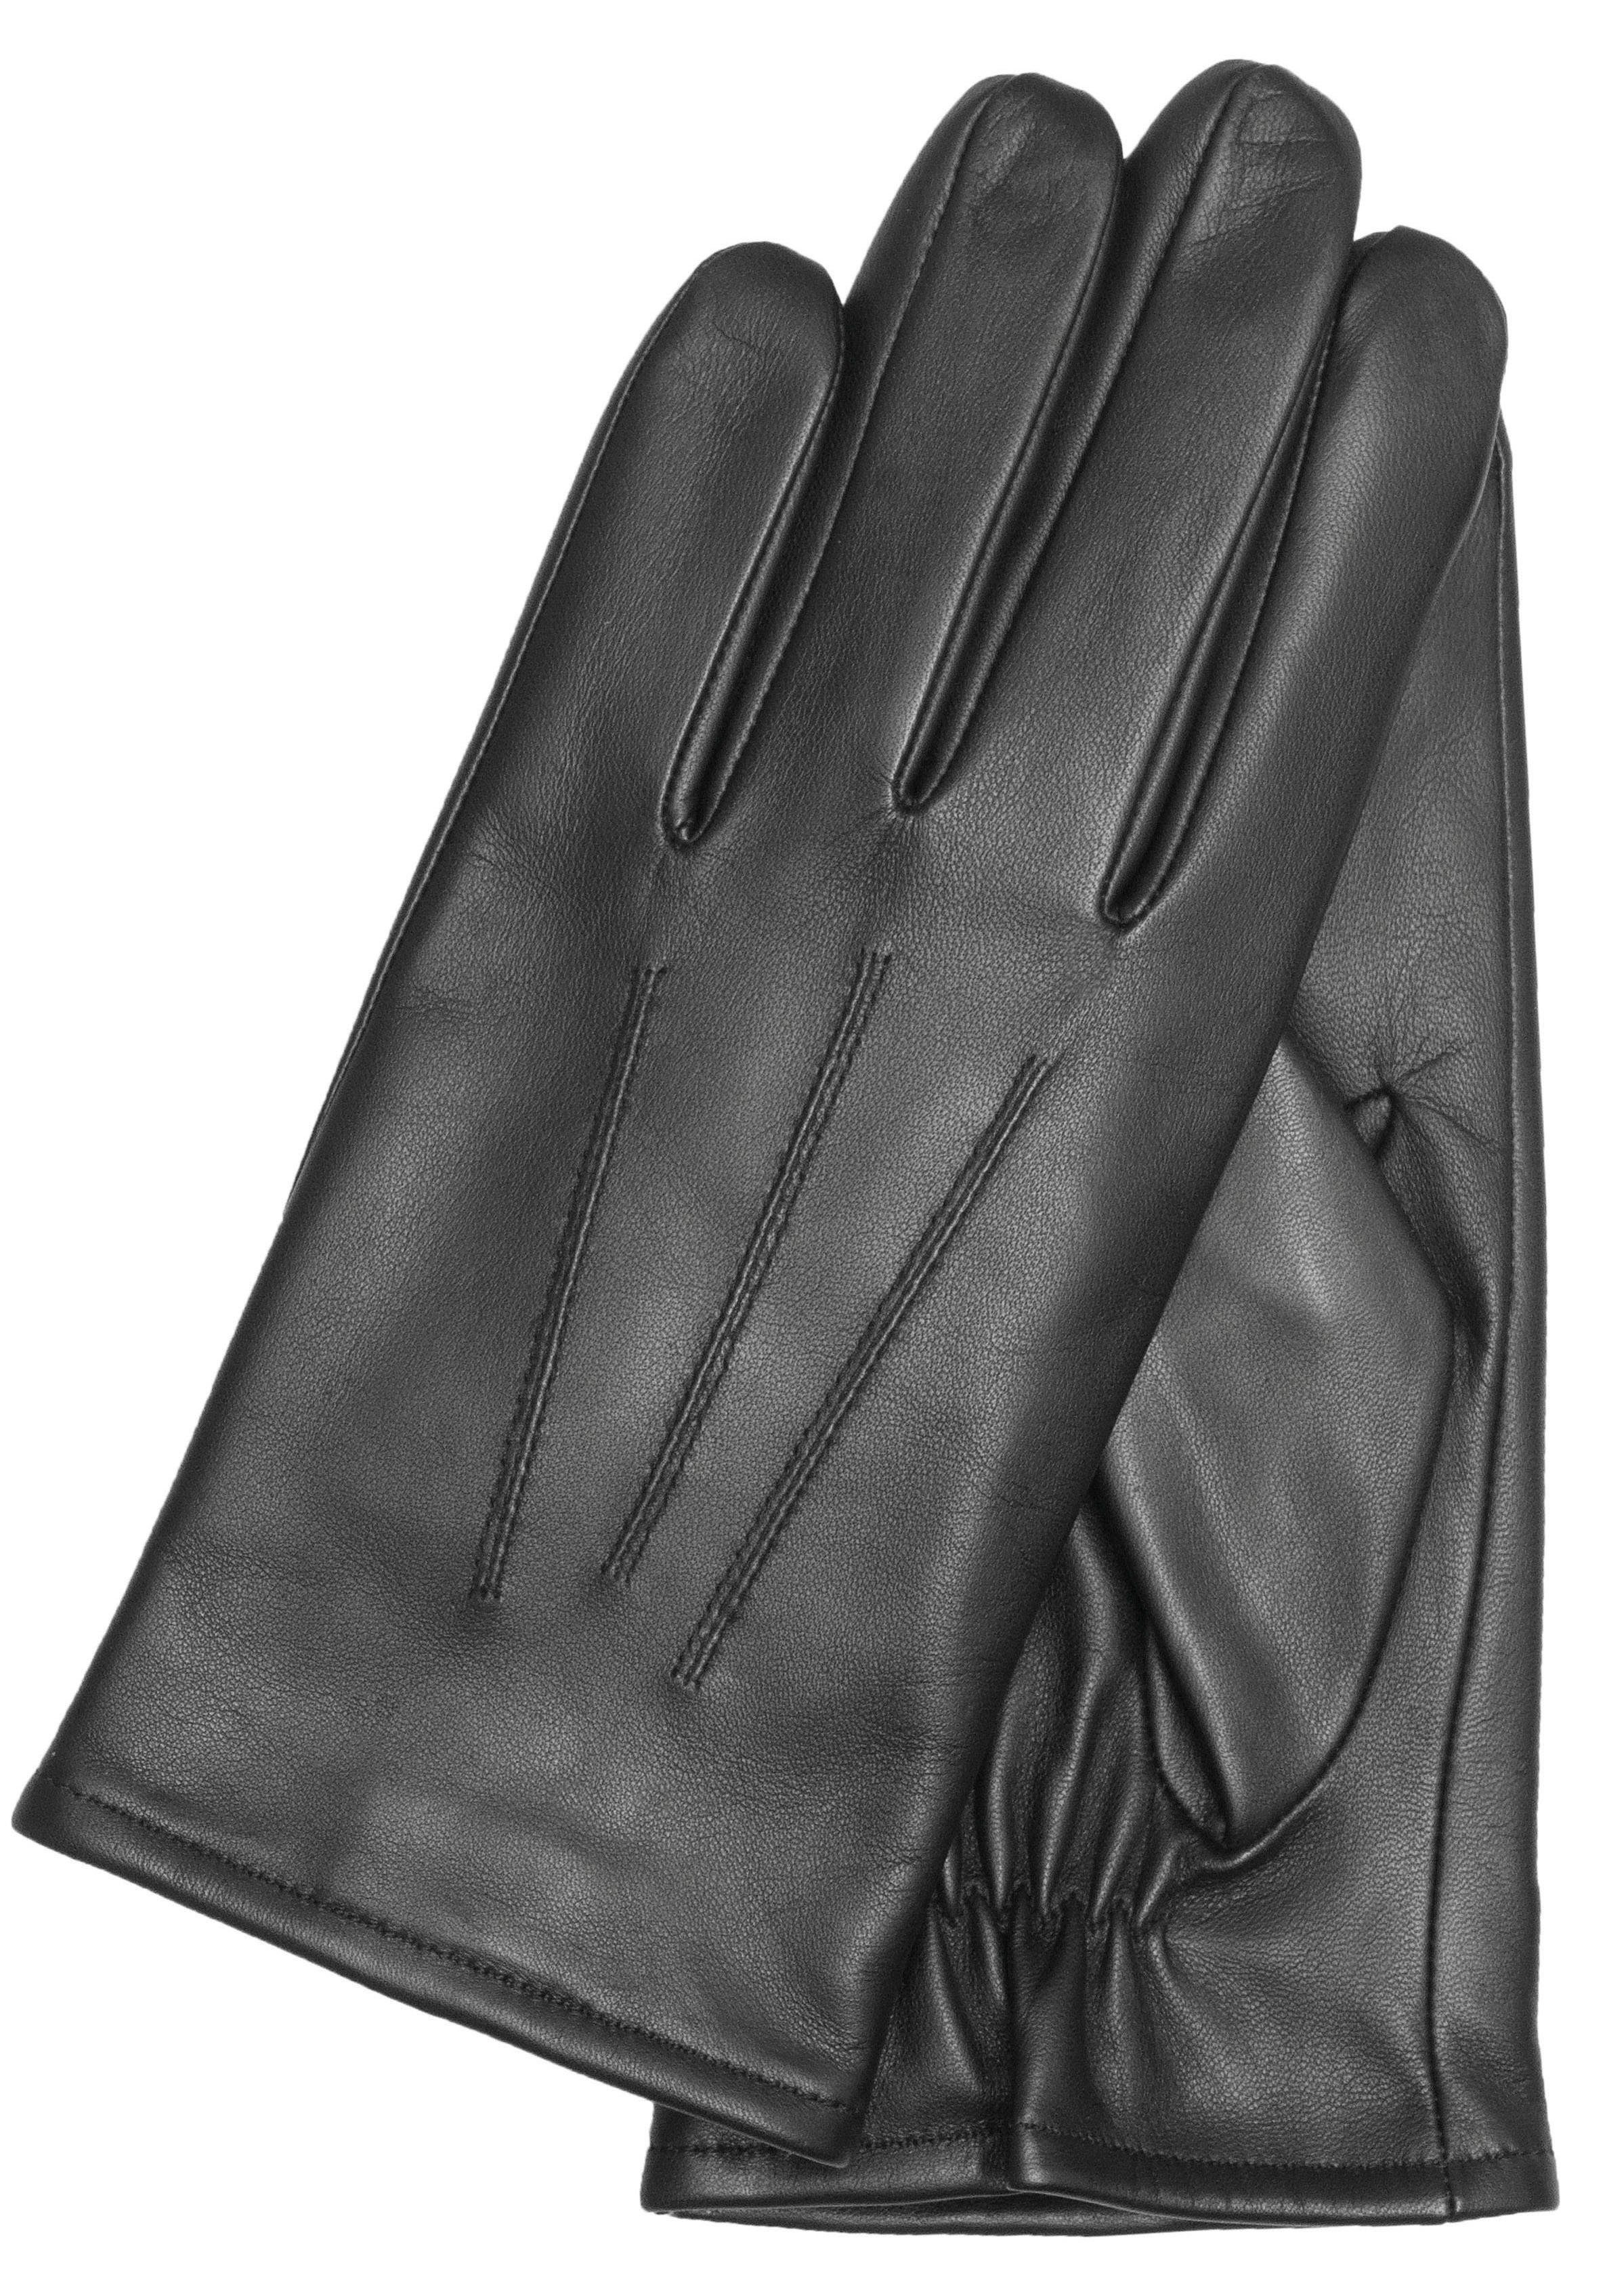 KESSLER Lederhandschuhe Liam Touchfunktion, schlanke Passform, Zierbiesen black | Handschuhe